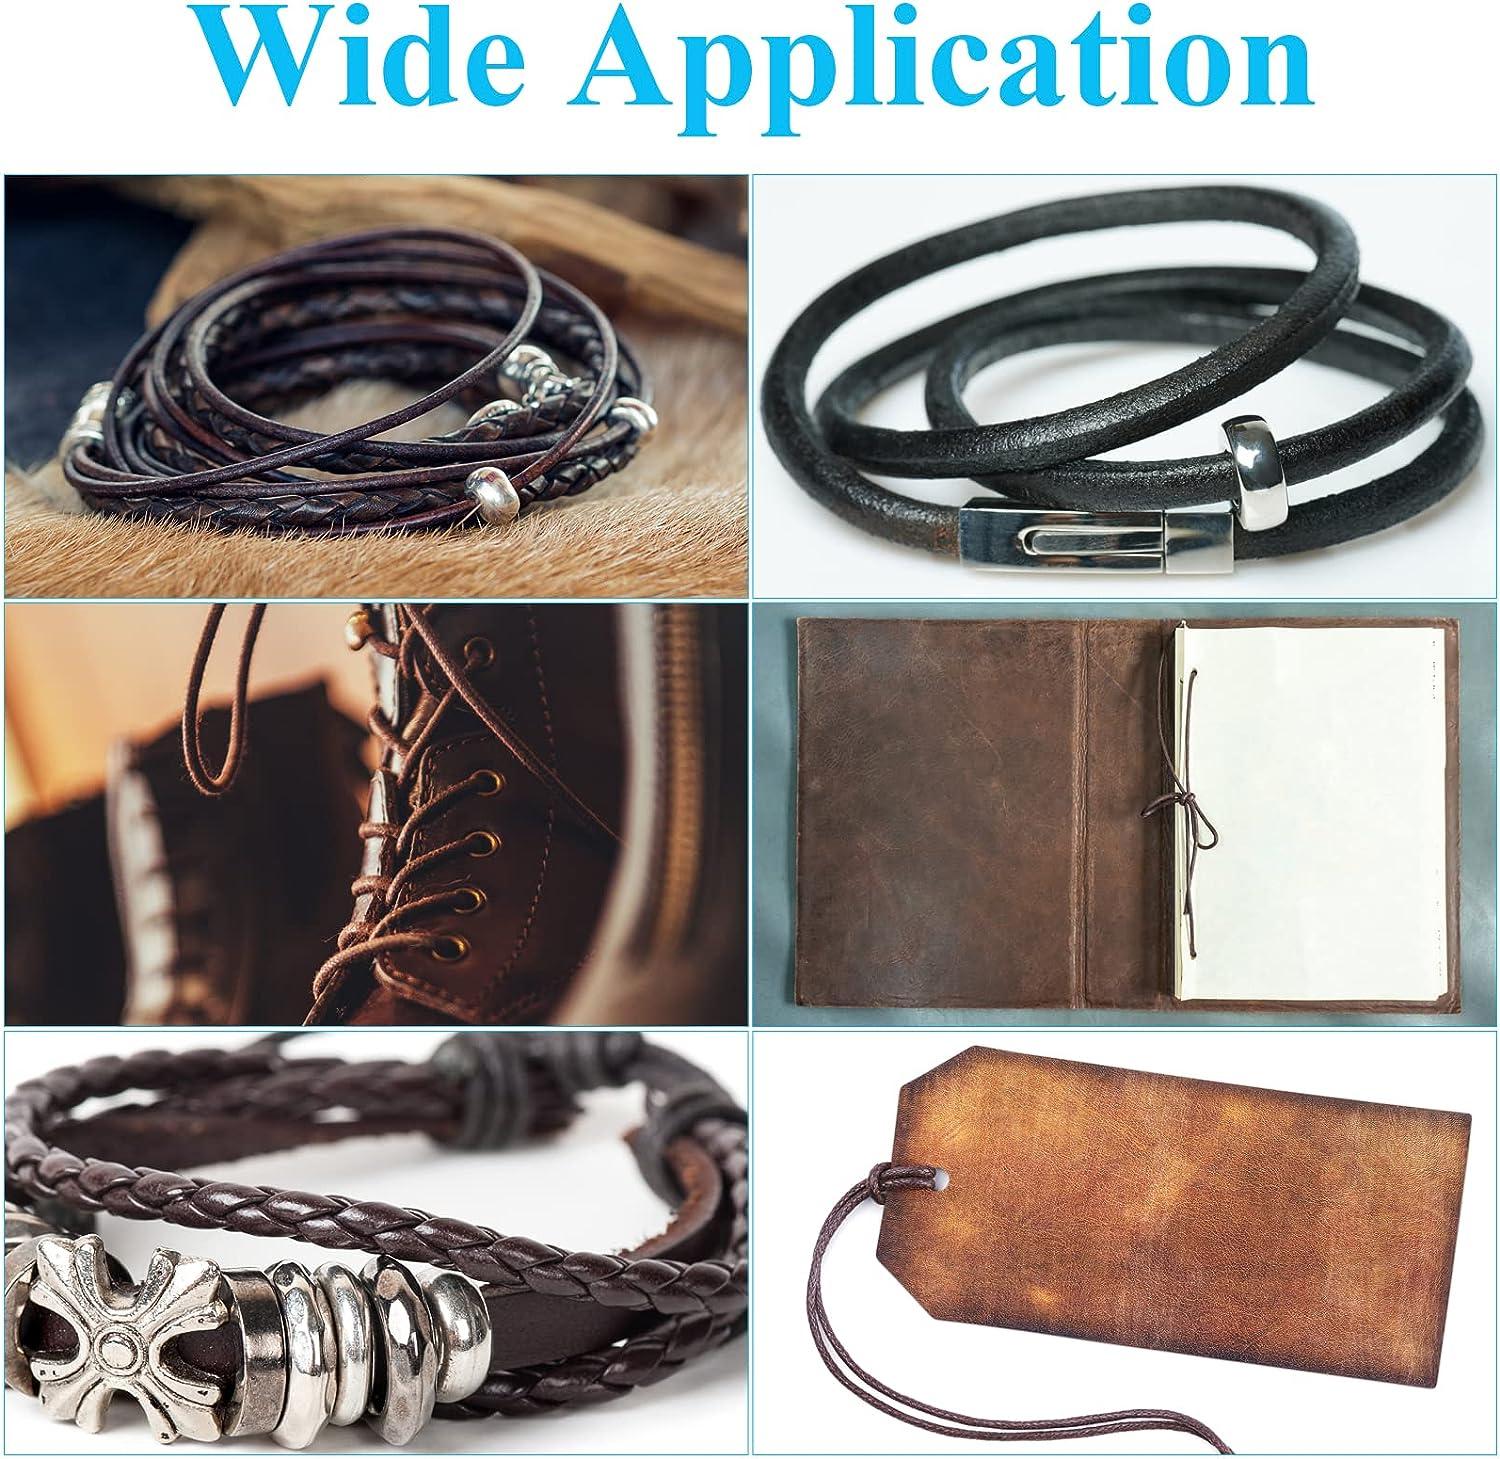 Braided Cord Jewelry Making, Leather Jewelry Making